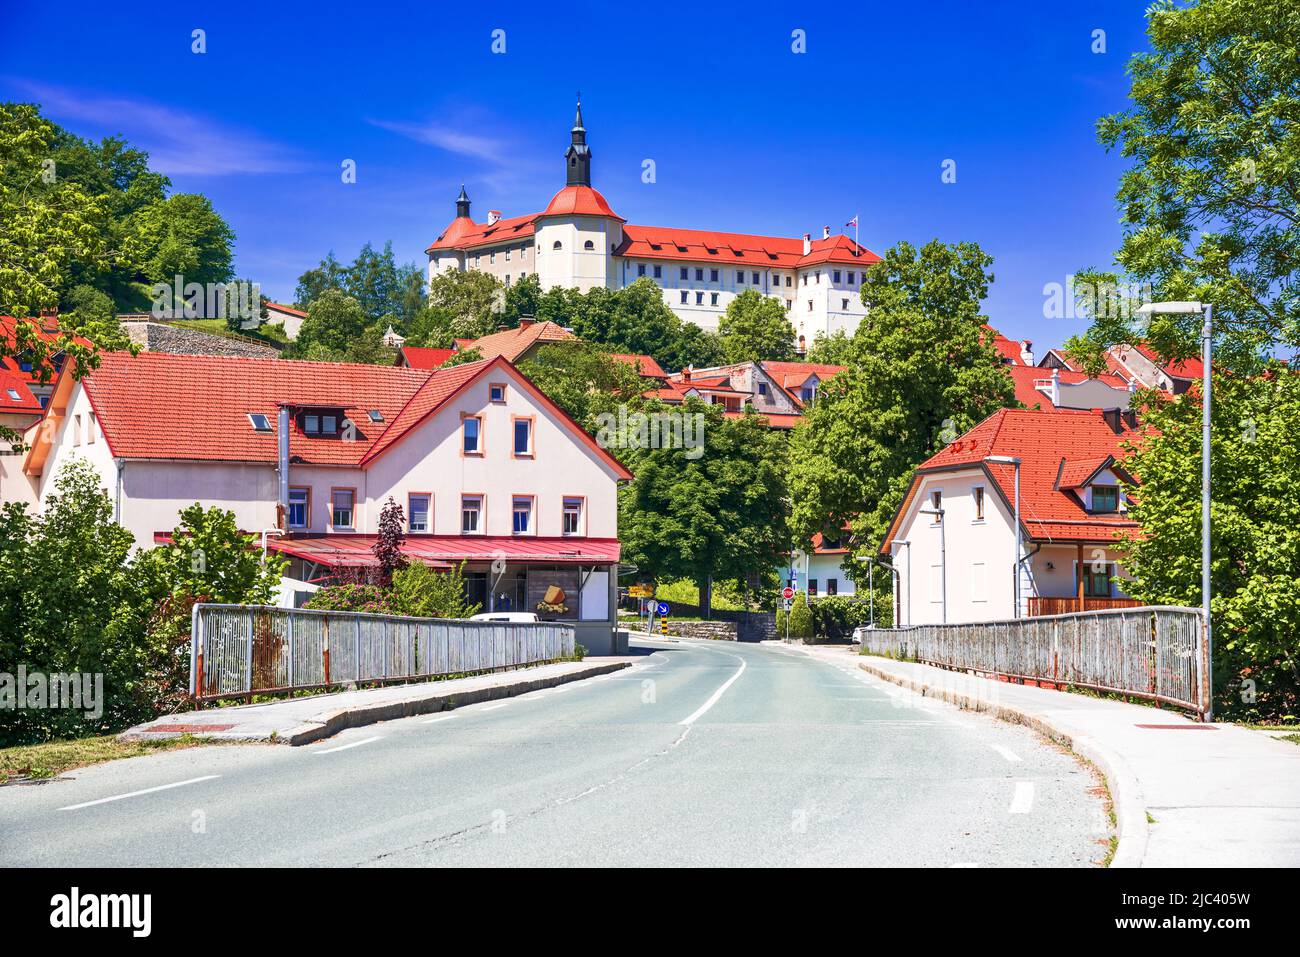 Skofja Loka, Slovenia. Storico borgo medievale nella regione di Carniola slovena. Foto Stock